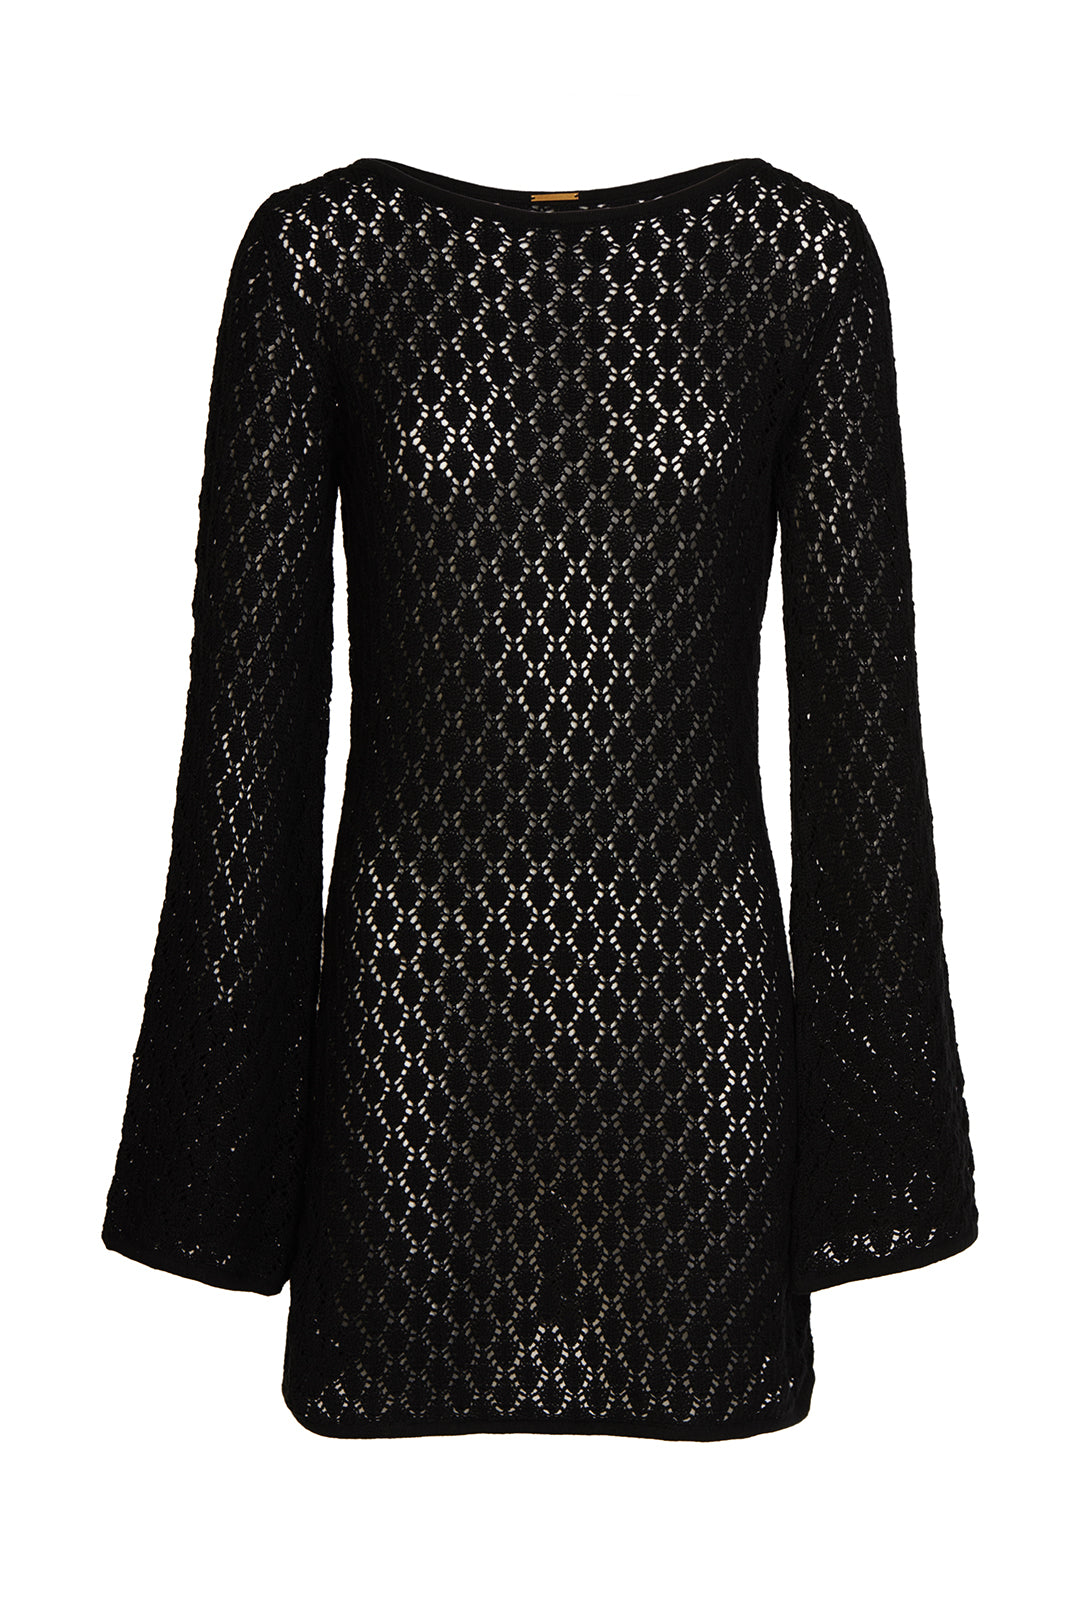 Bimini Crochet Dress - Black